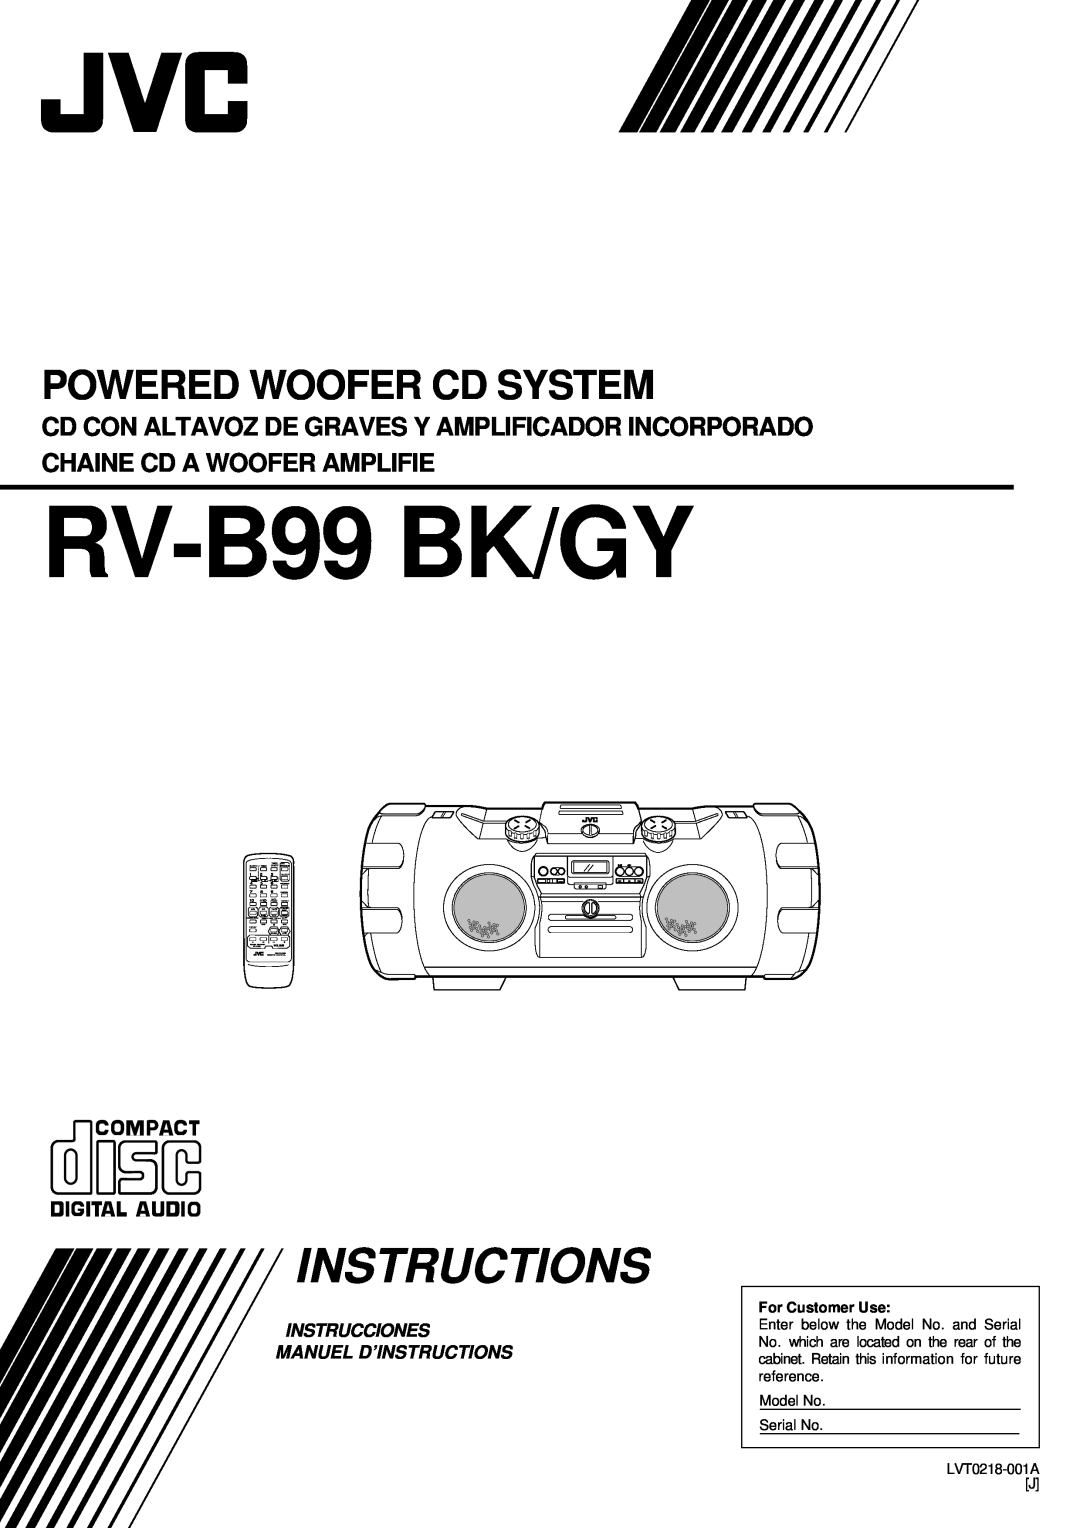 JVC manual Instrucciones Manuel D’Instructions, RV-B99BK/GY, Powered Woofer Cd System, Sleep, Volume, Tape Tuner 